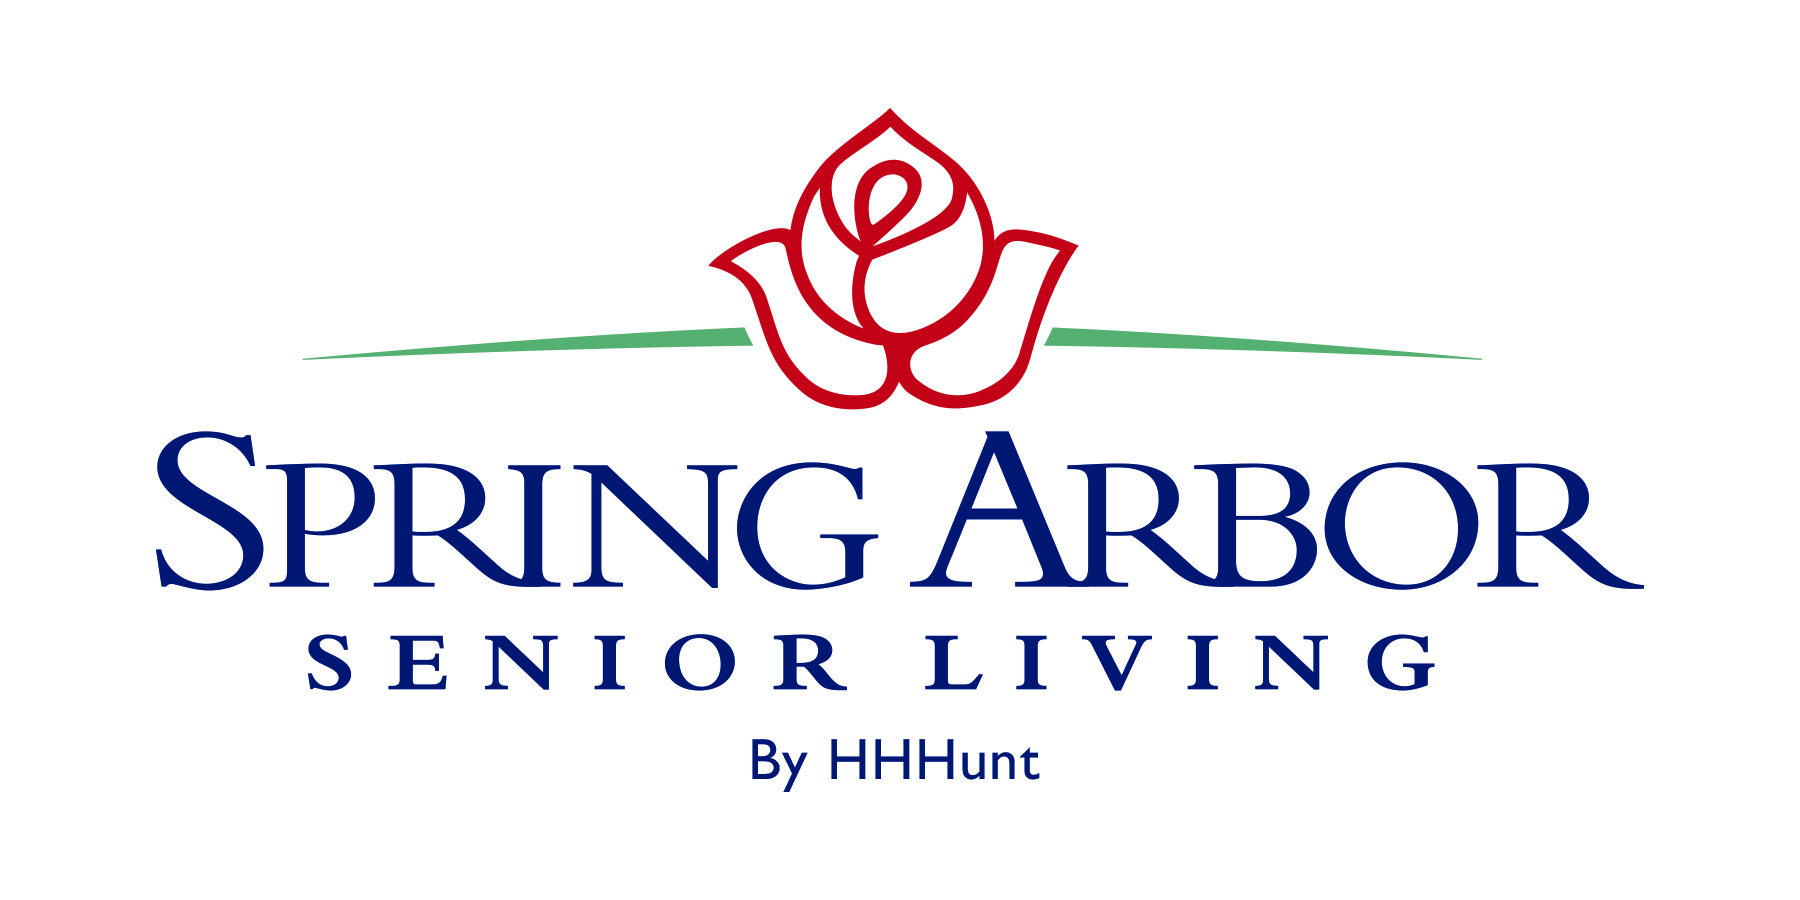 9.2. Spring Arbor Senior Living (Bronze)